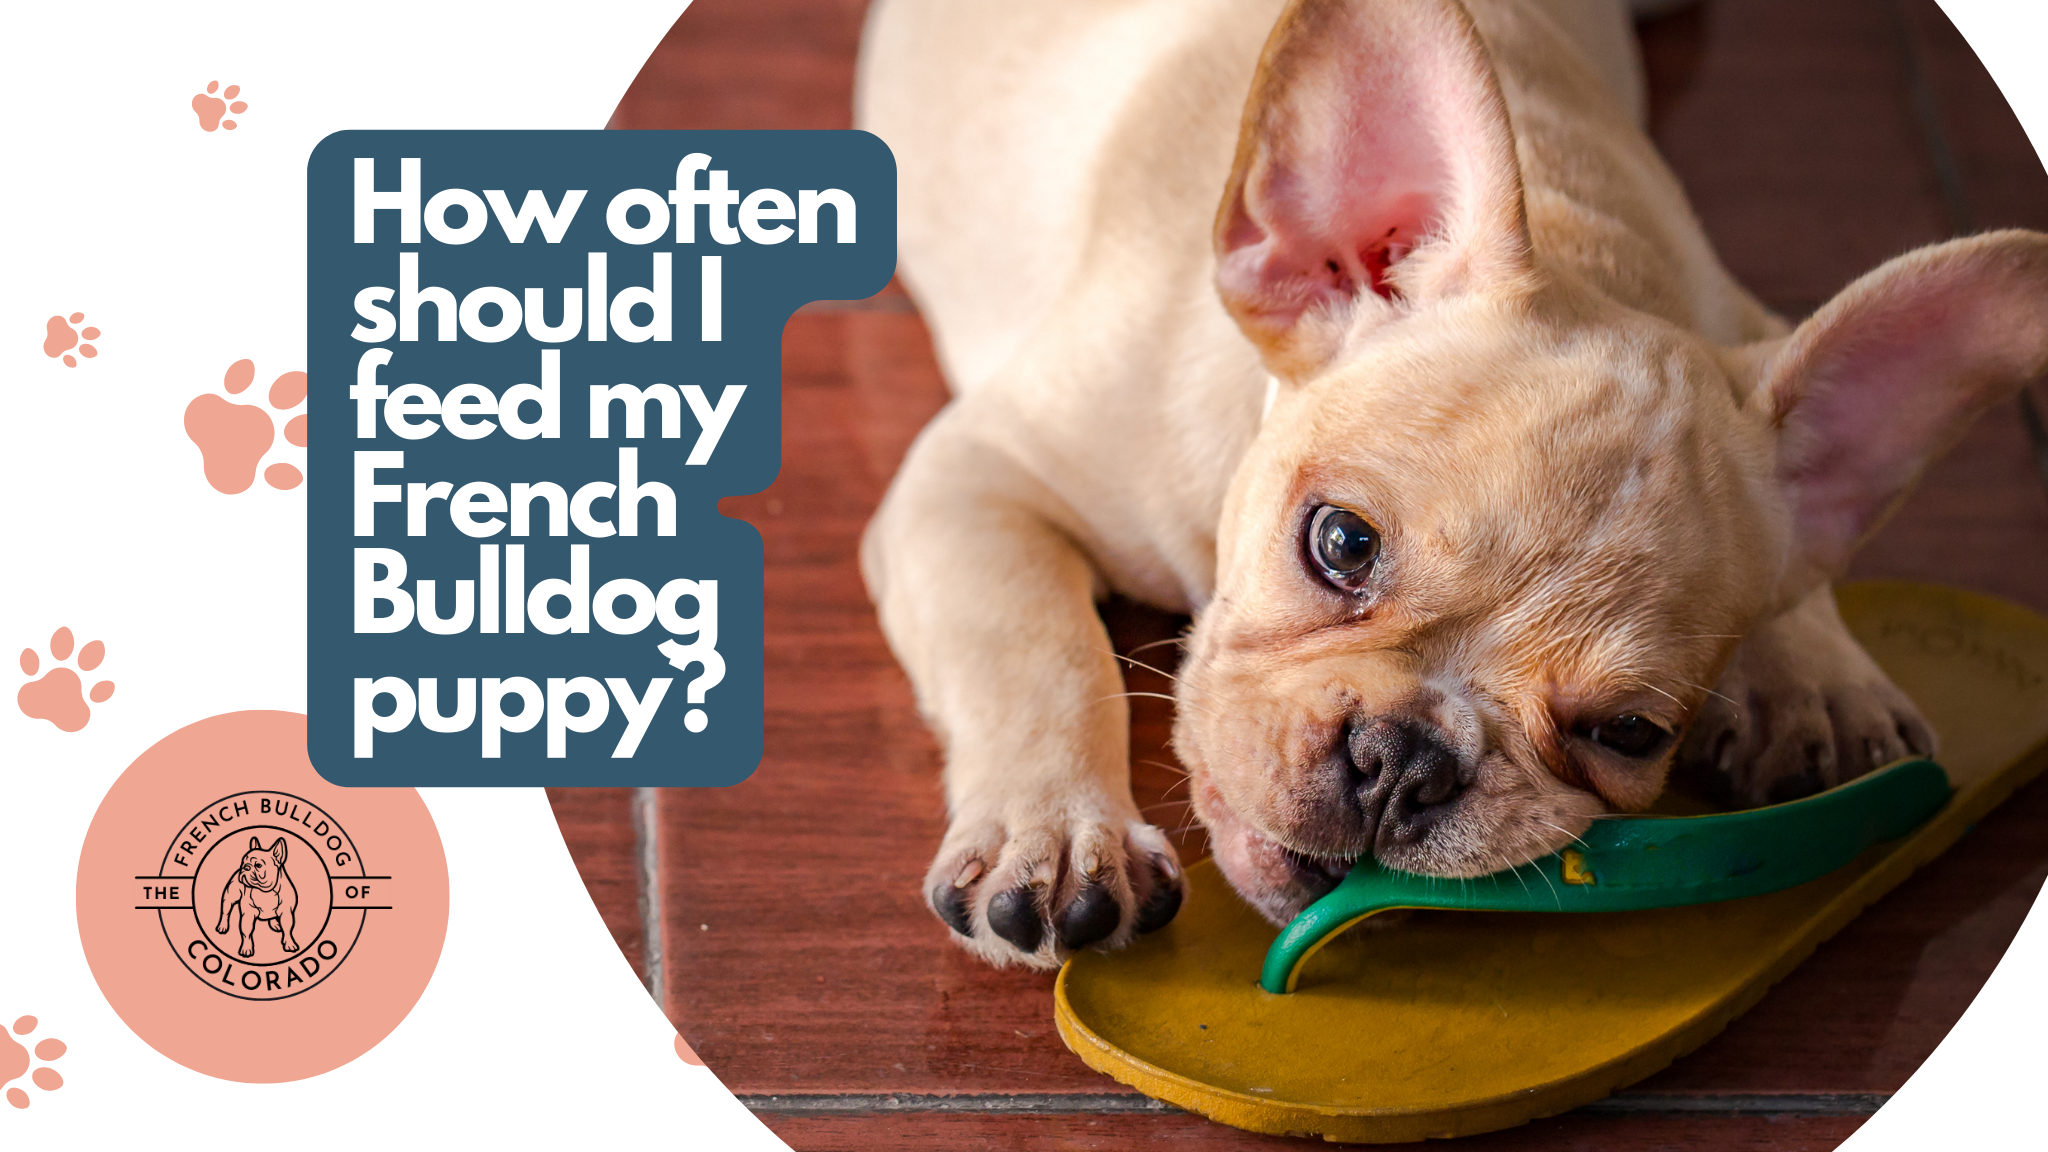 How often should I feed my French Bulldog puppy? The French Bulldog of Colorado Blog